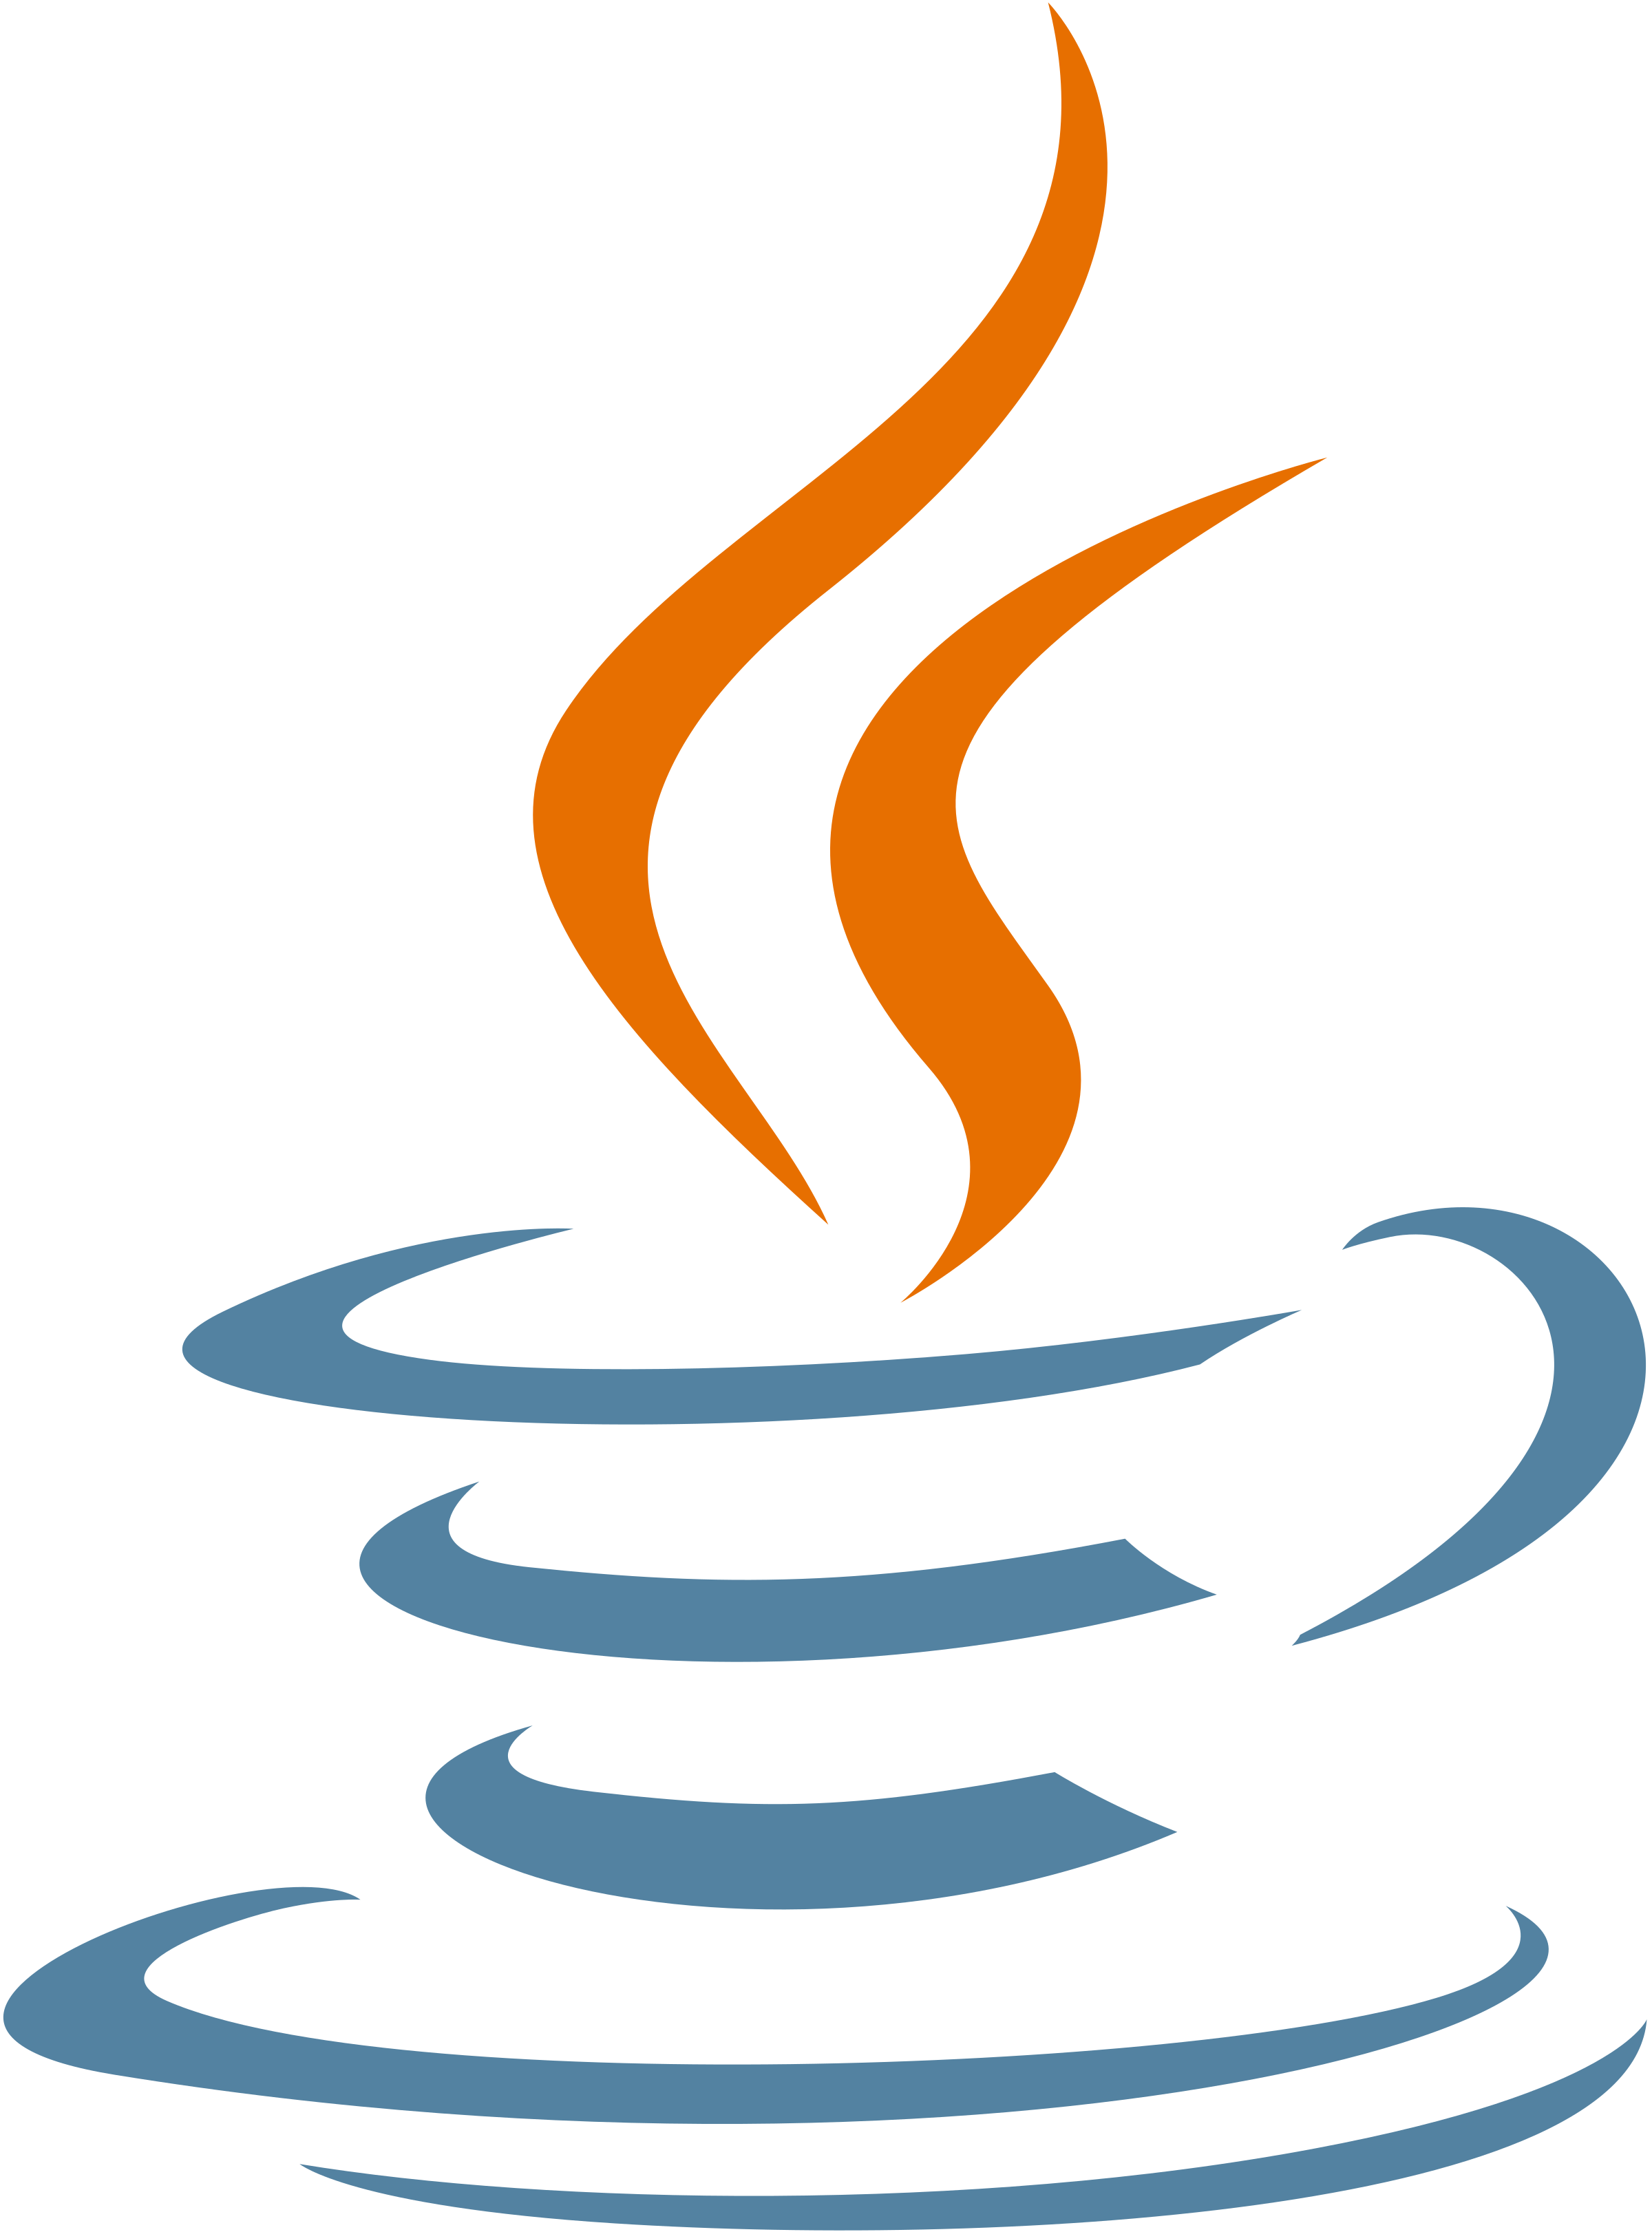 Джава 8. Значок java. Язык программирования java лого. Java язык программирования logo. Джава язык программирования логотип.